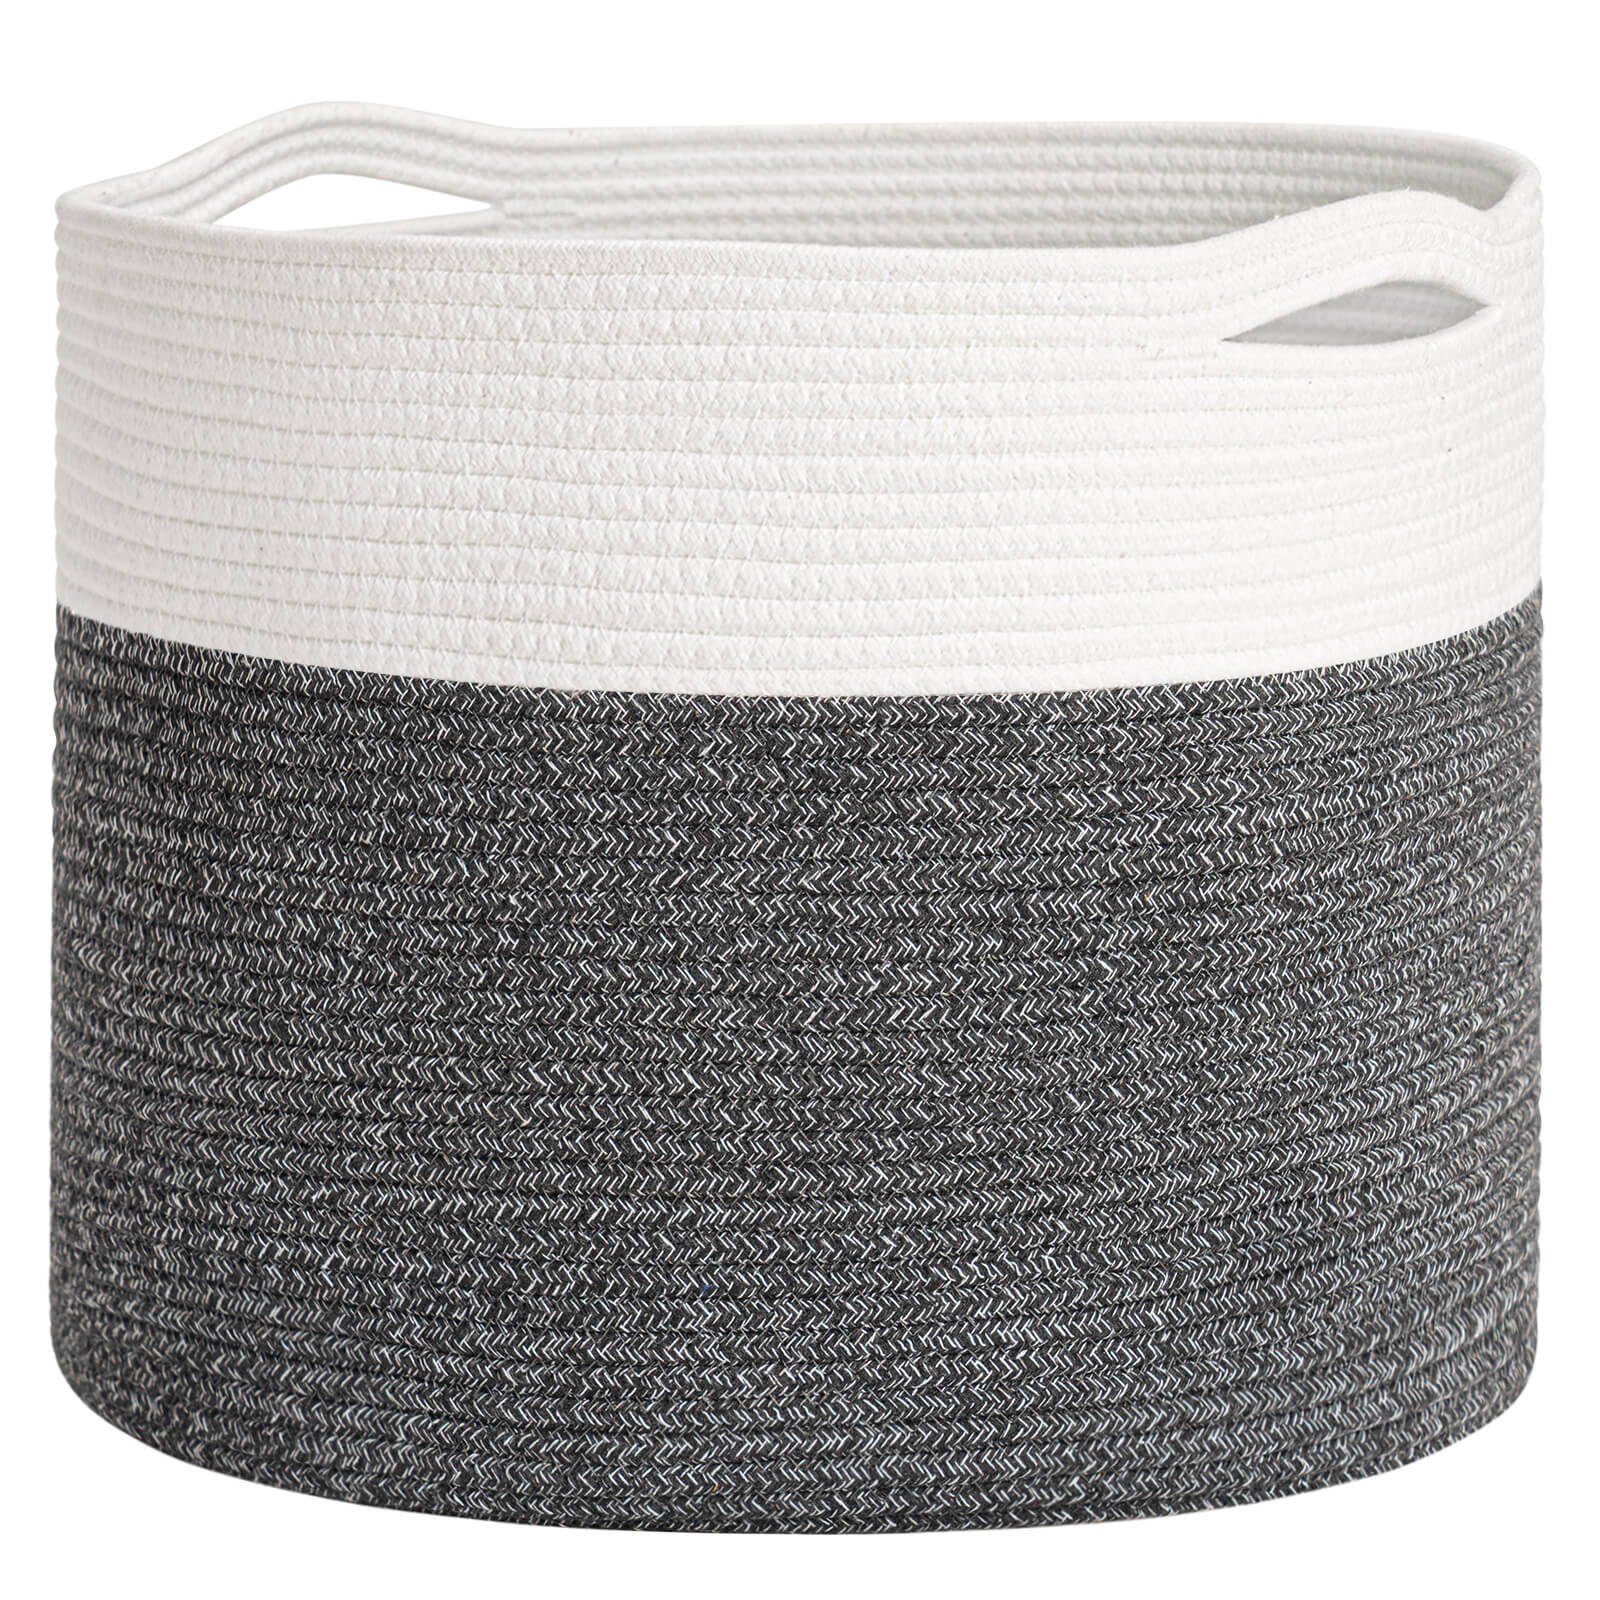 Goodpick White & Grey Woven Rope Storage Basket